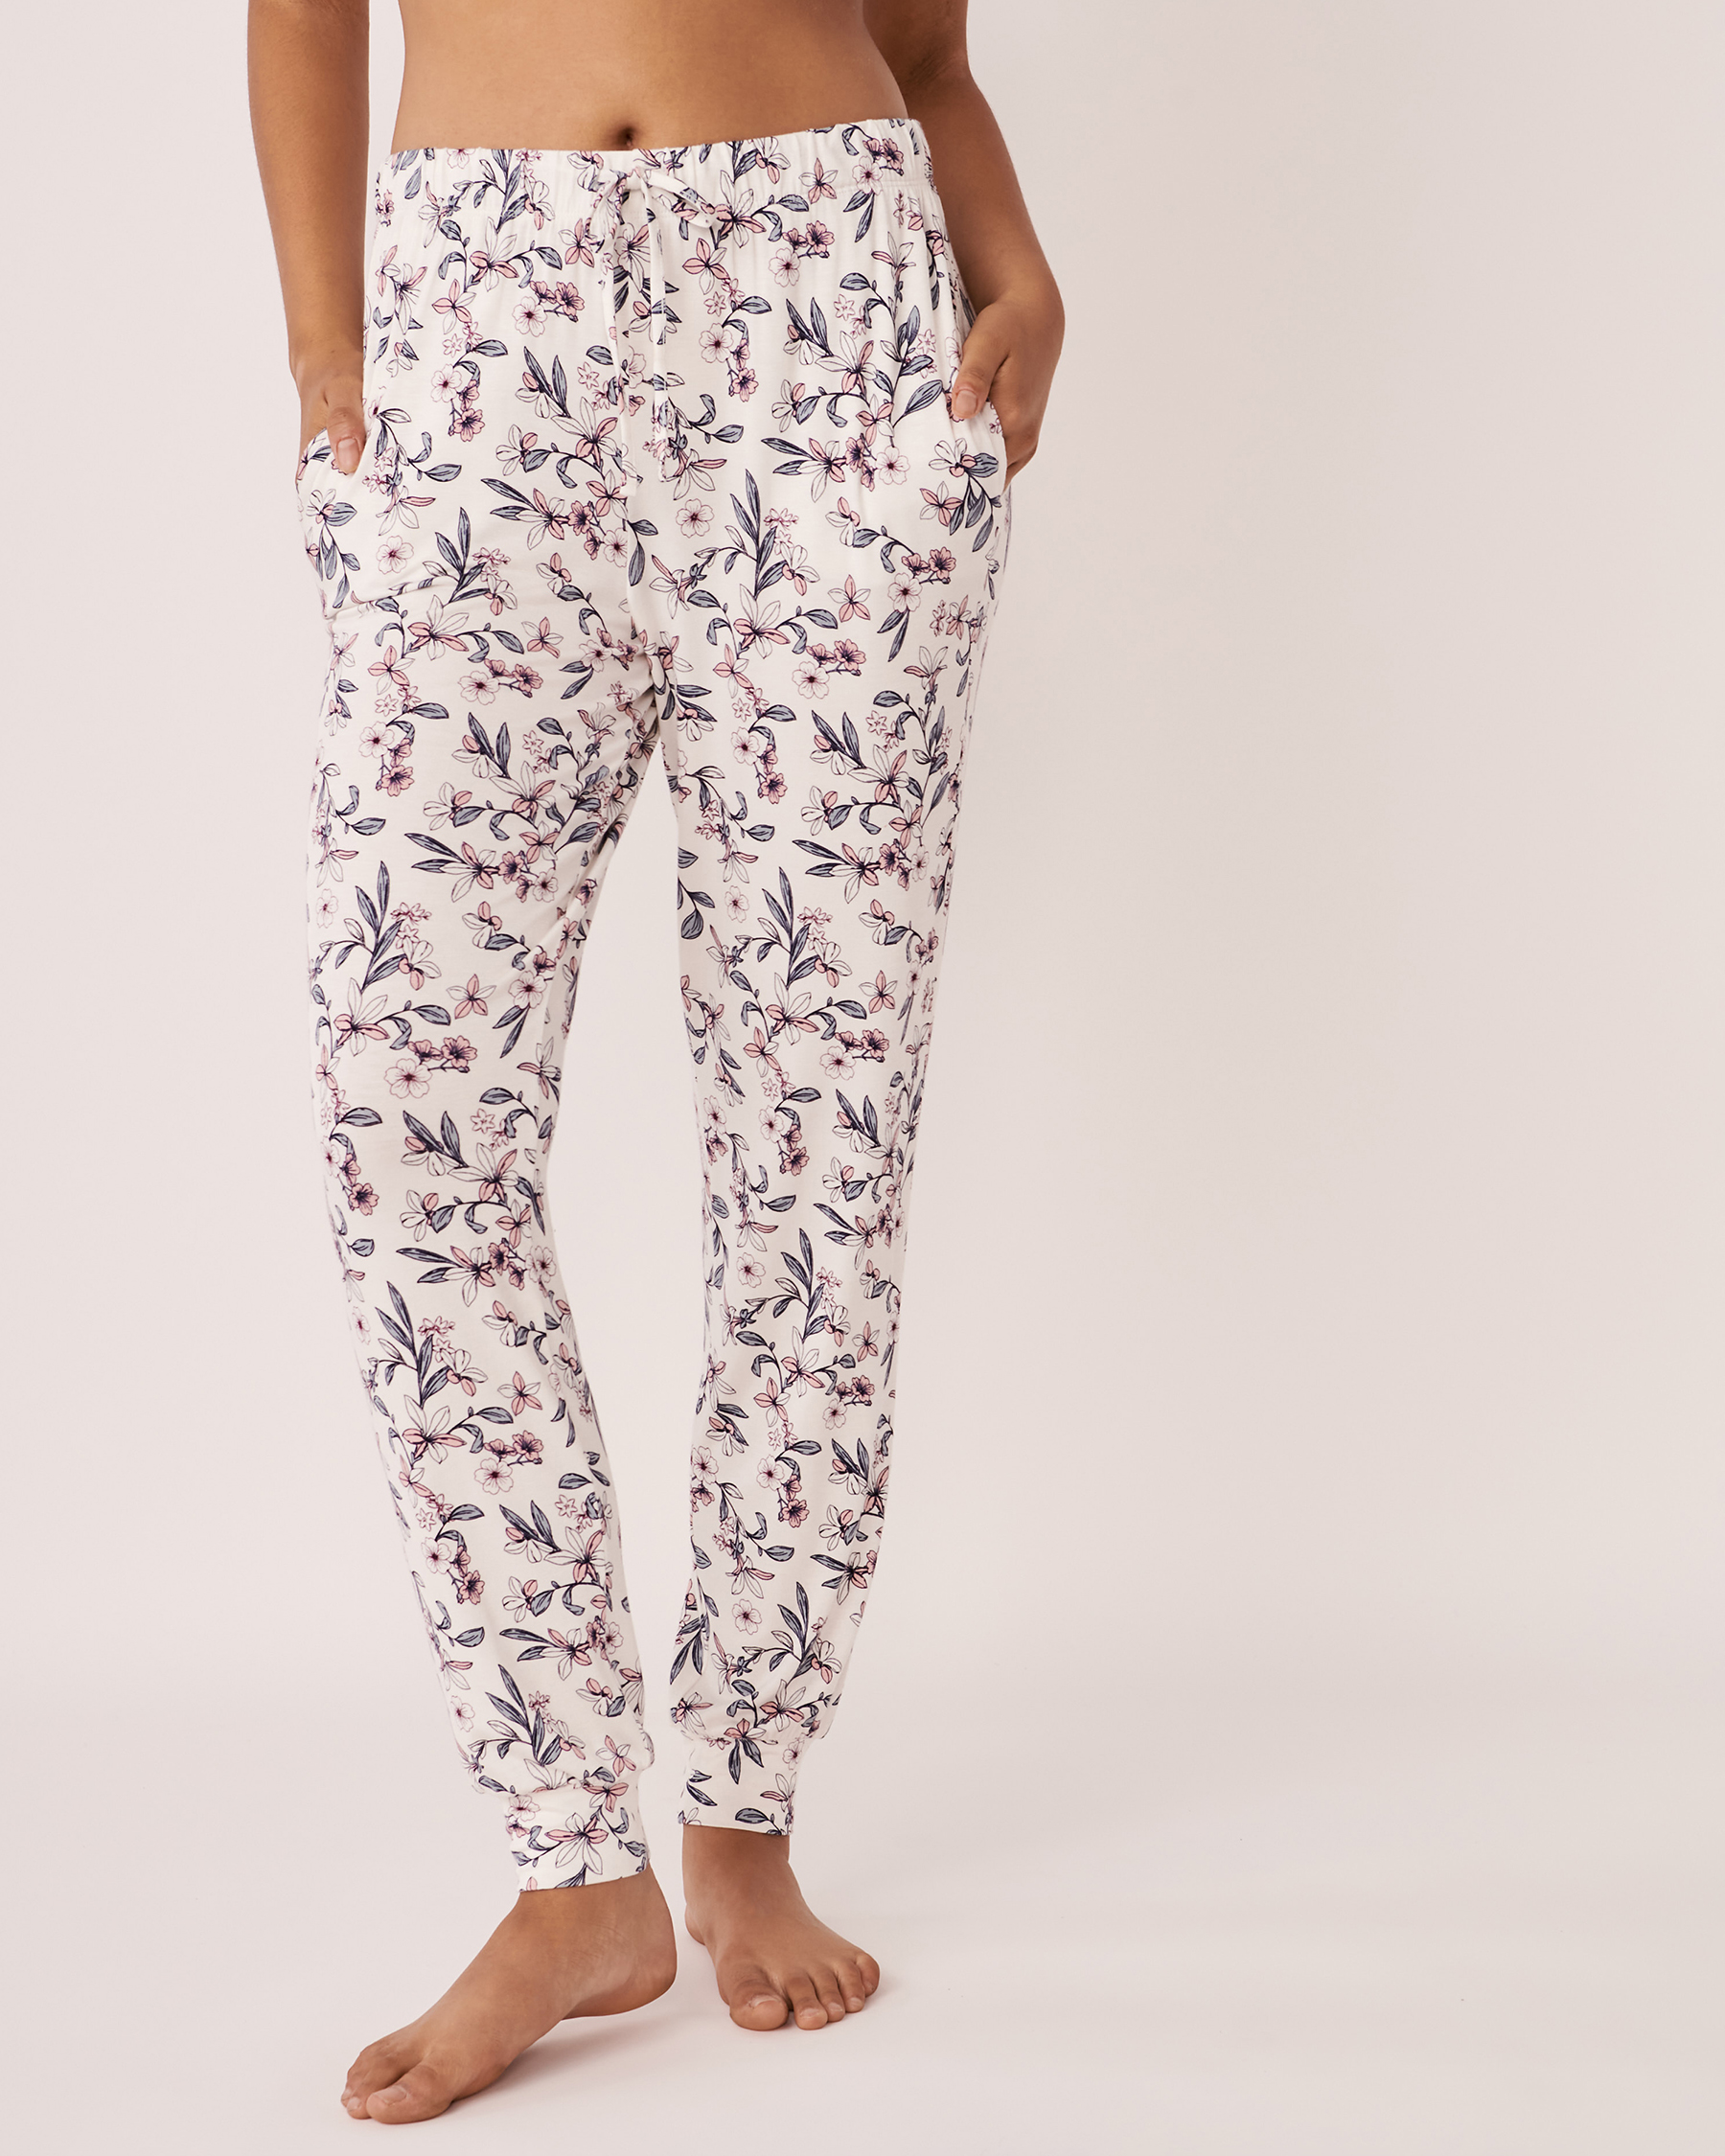 Soft Knit Jersey Fitted Pants - White floral | la Vie en Rose